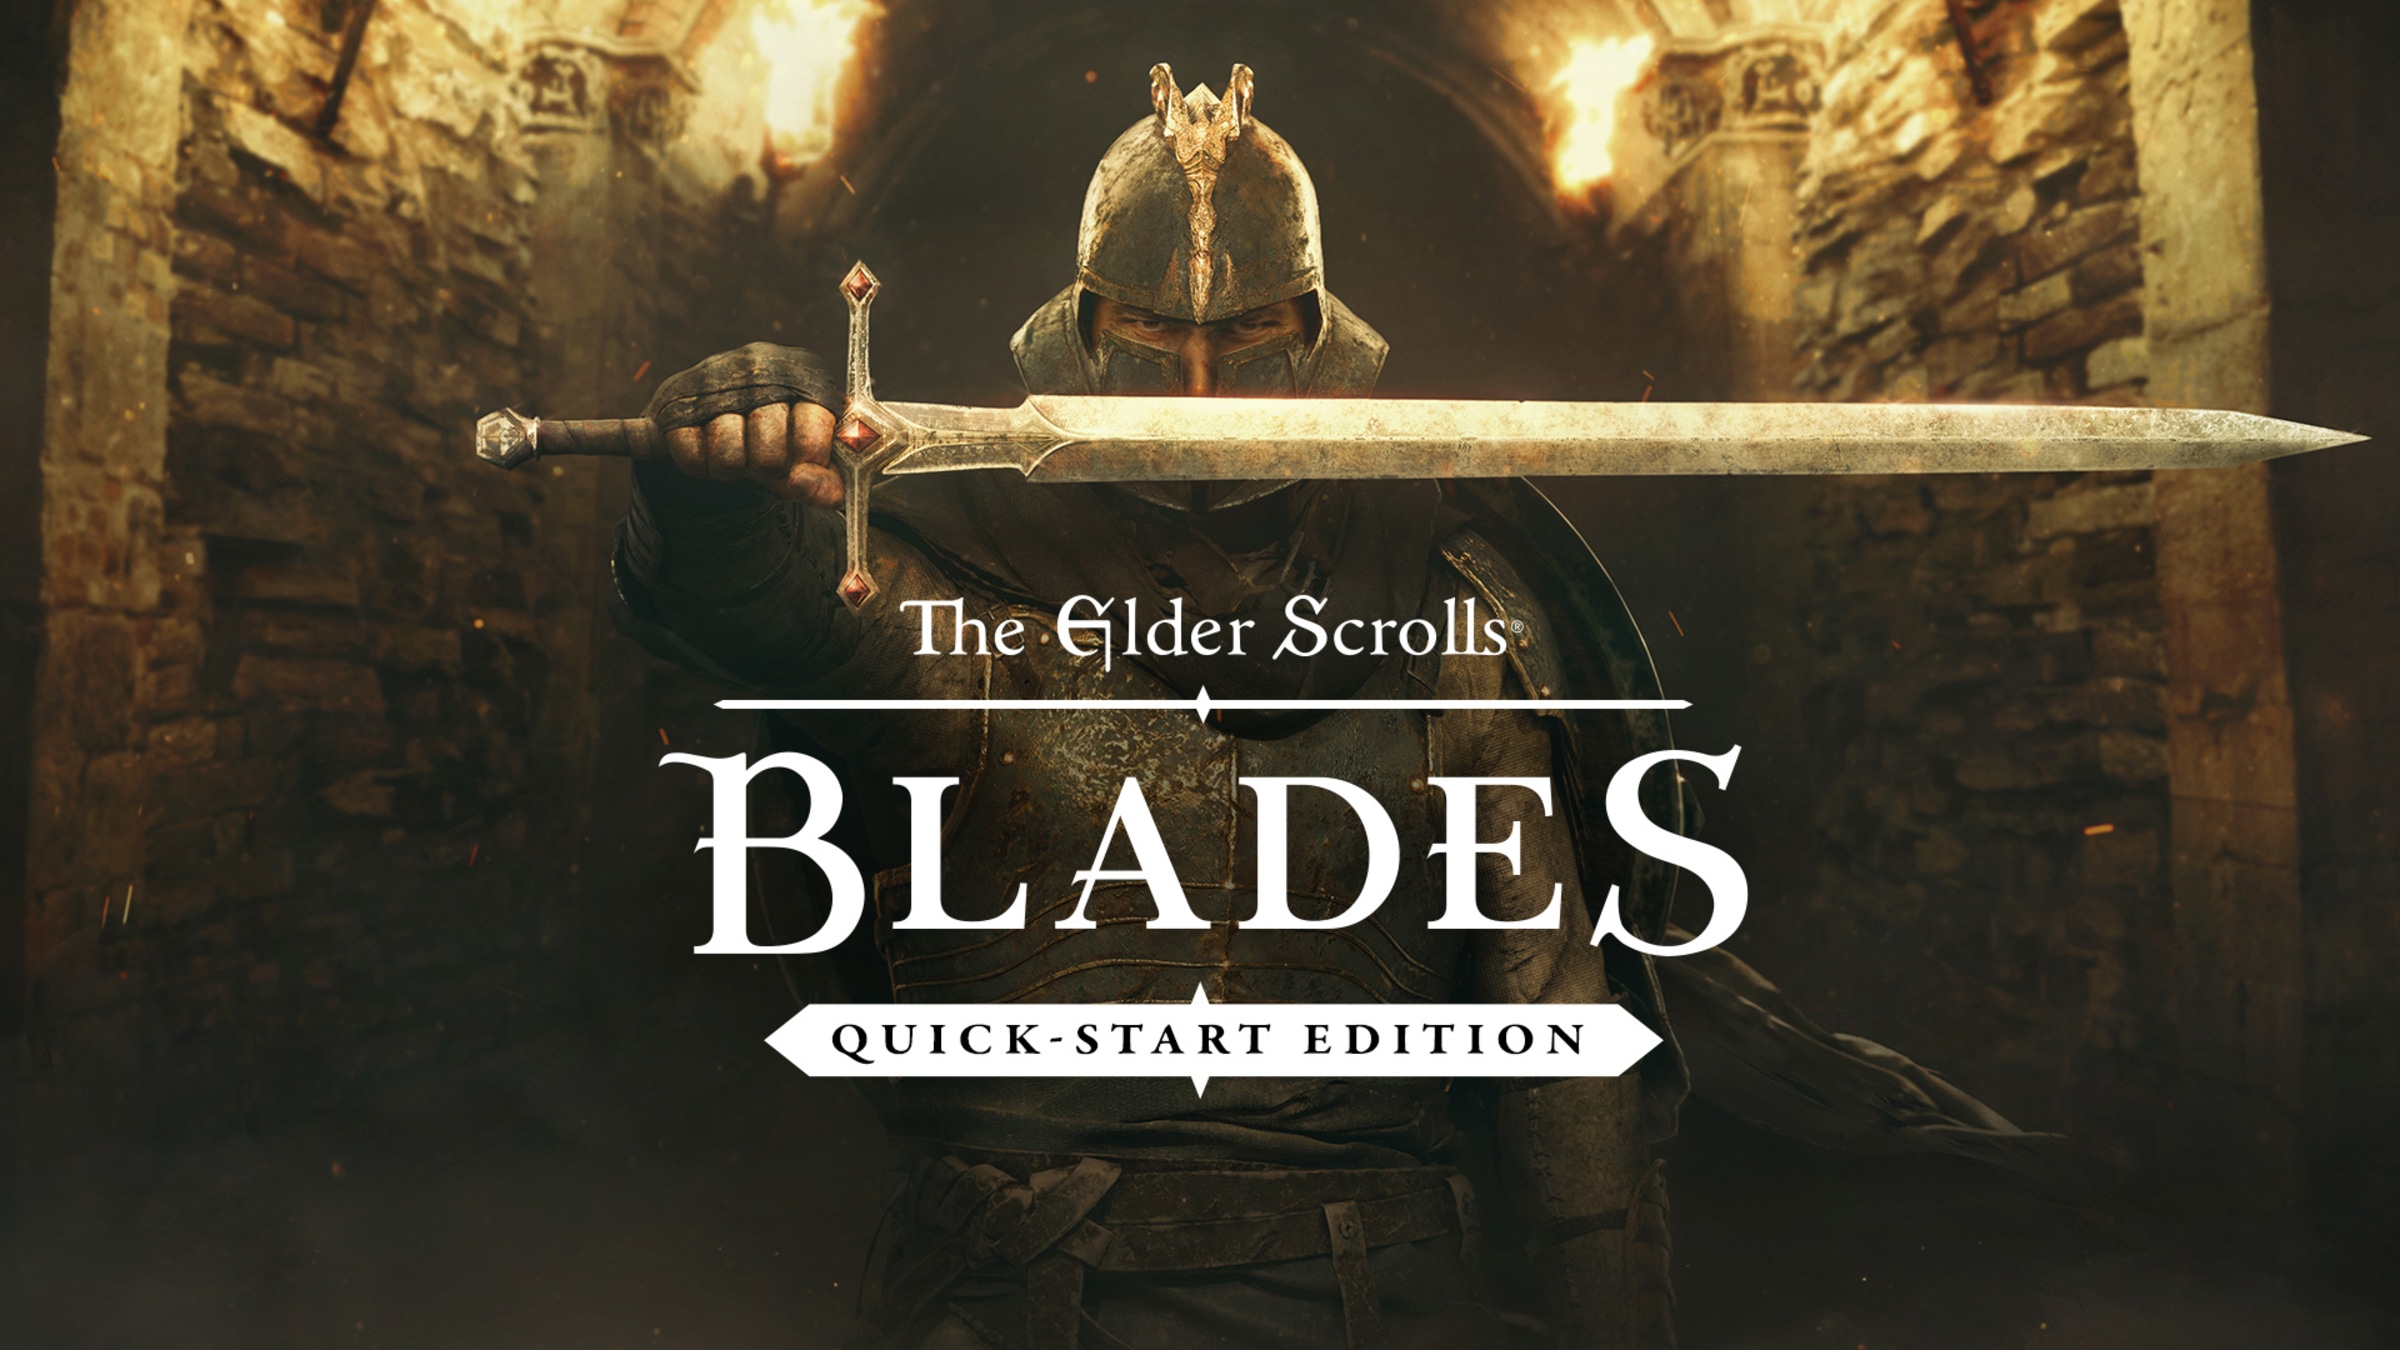 Start edition. The Elder Scrolls Blades. Древние свитки Blades. The Elder Scrolls: Blades support. The Elder Scrolls: Blades система: Nintendo Switch Дата выпуска: 14.05.2020.